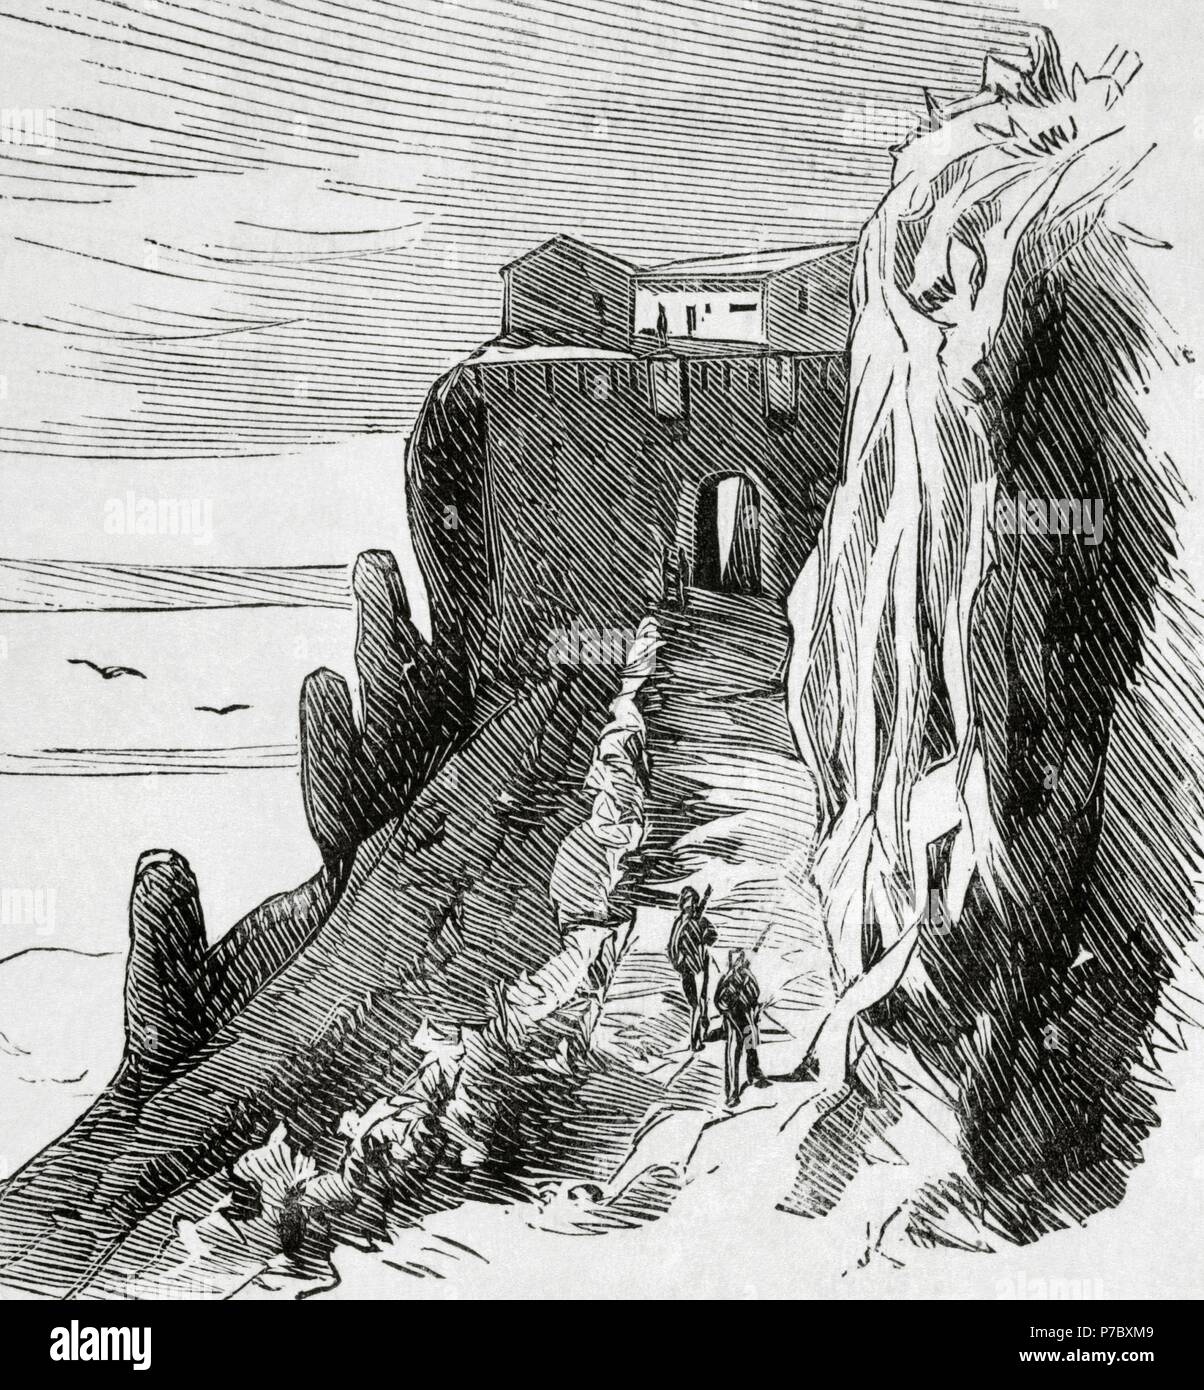 Spain. Third Carlist War (1872-1876). Alava. Fort of San Leon. Entry. Engraving by D. E. Crespo. La Ilustracio n Espan ola y Americana, 1876. Stock Photo